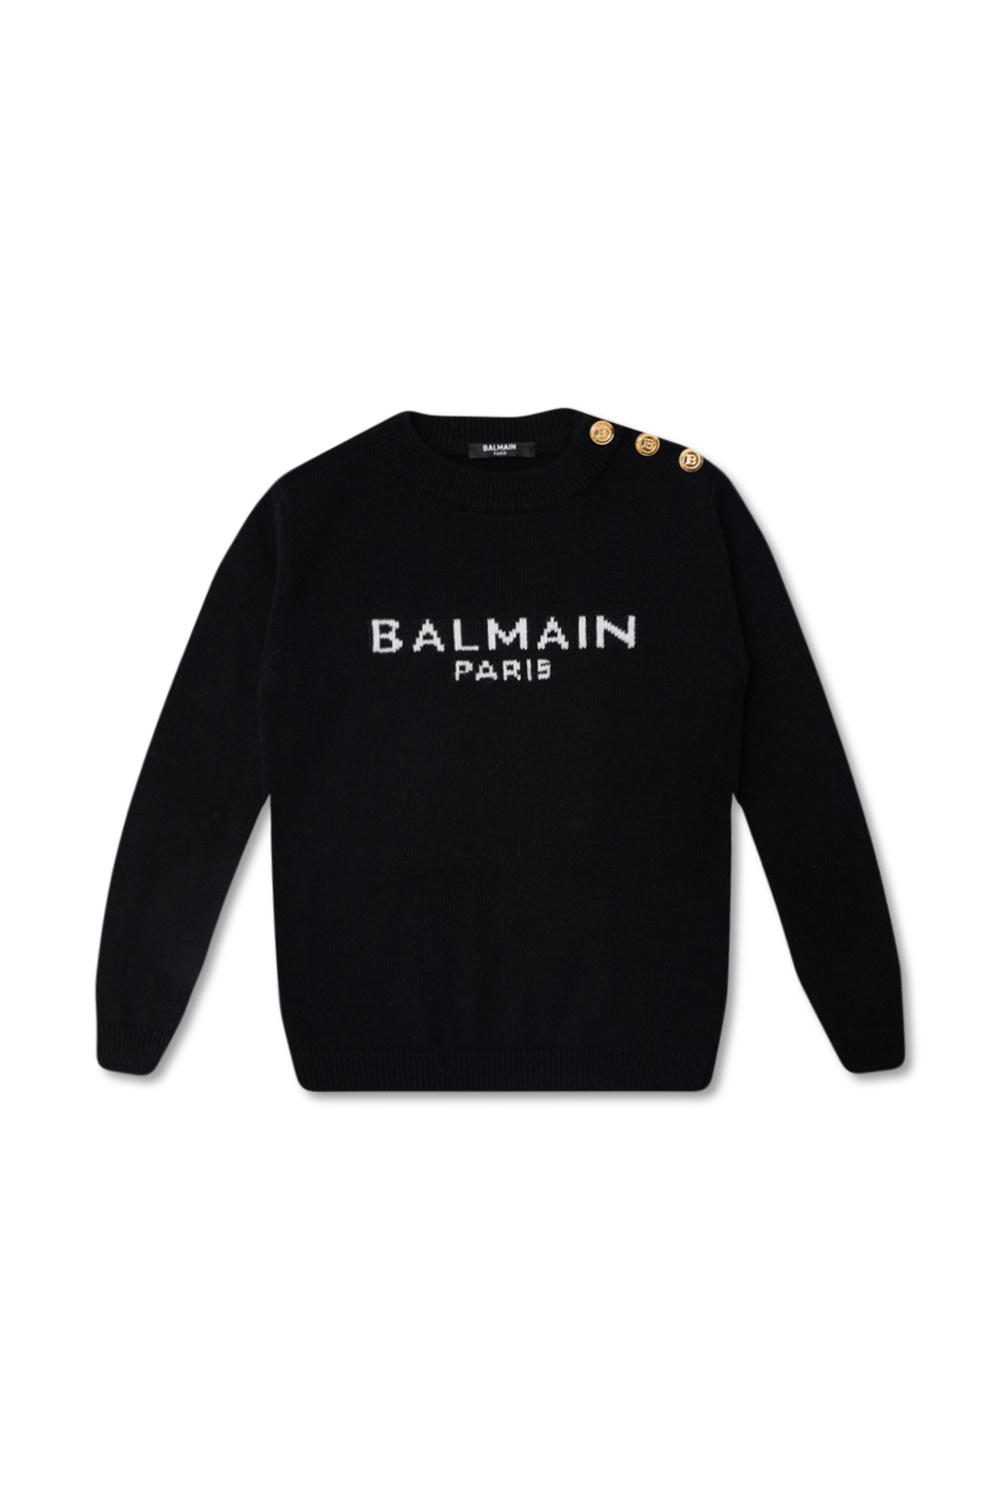 balmain b17170 Kids Sweater with logo